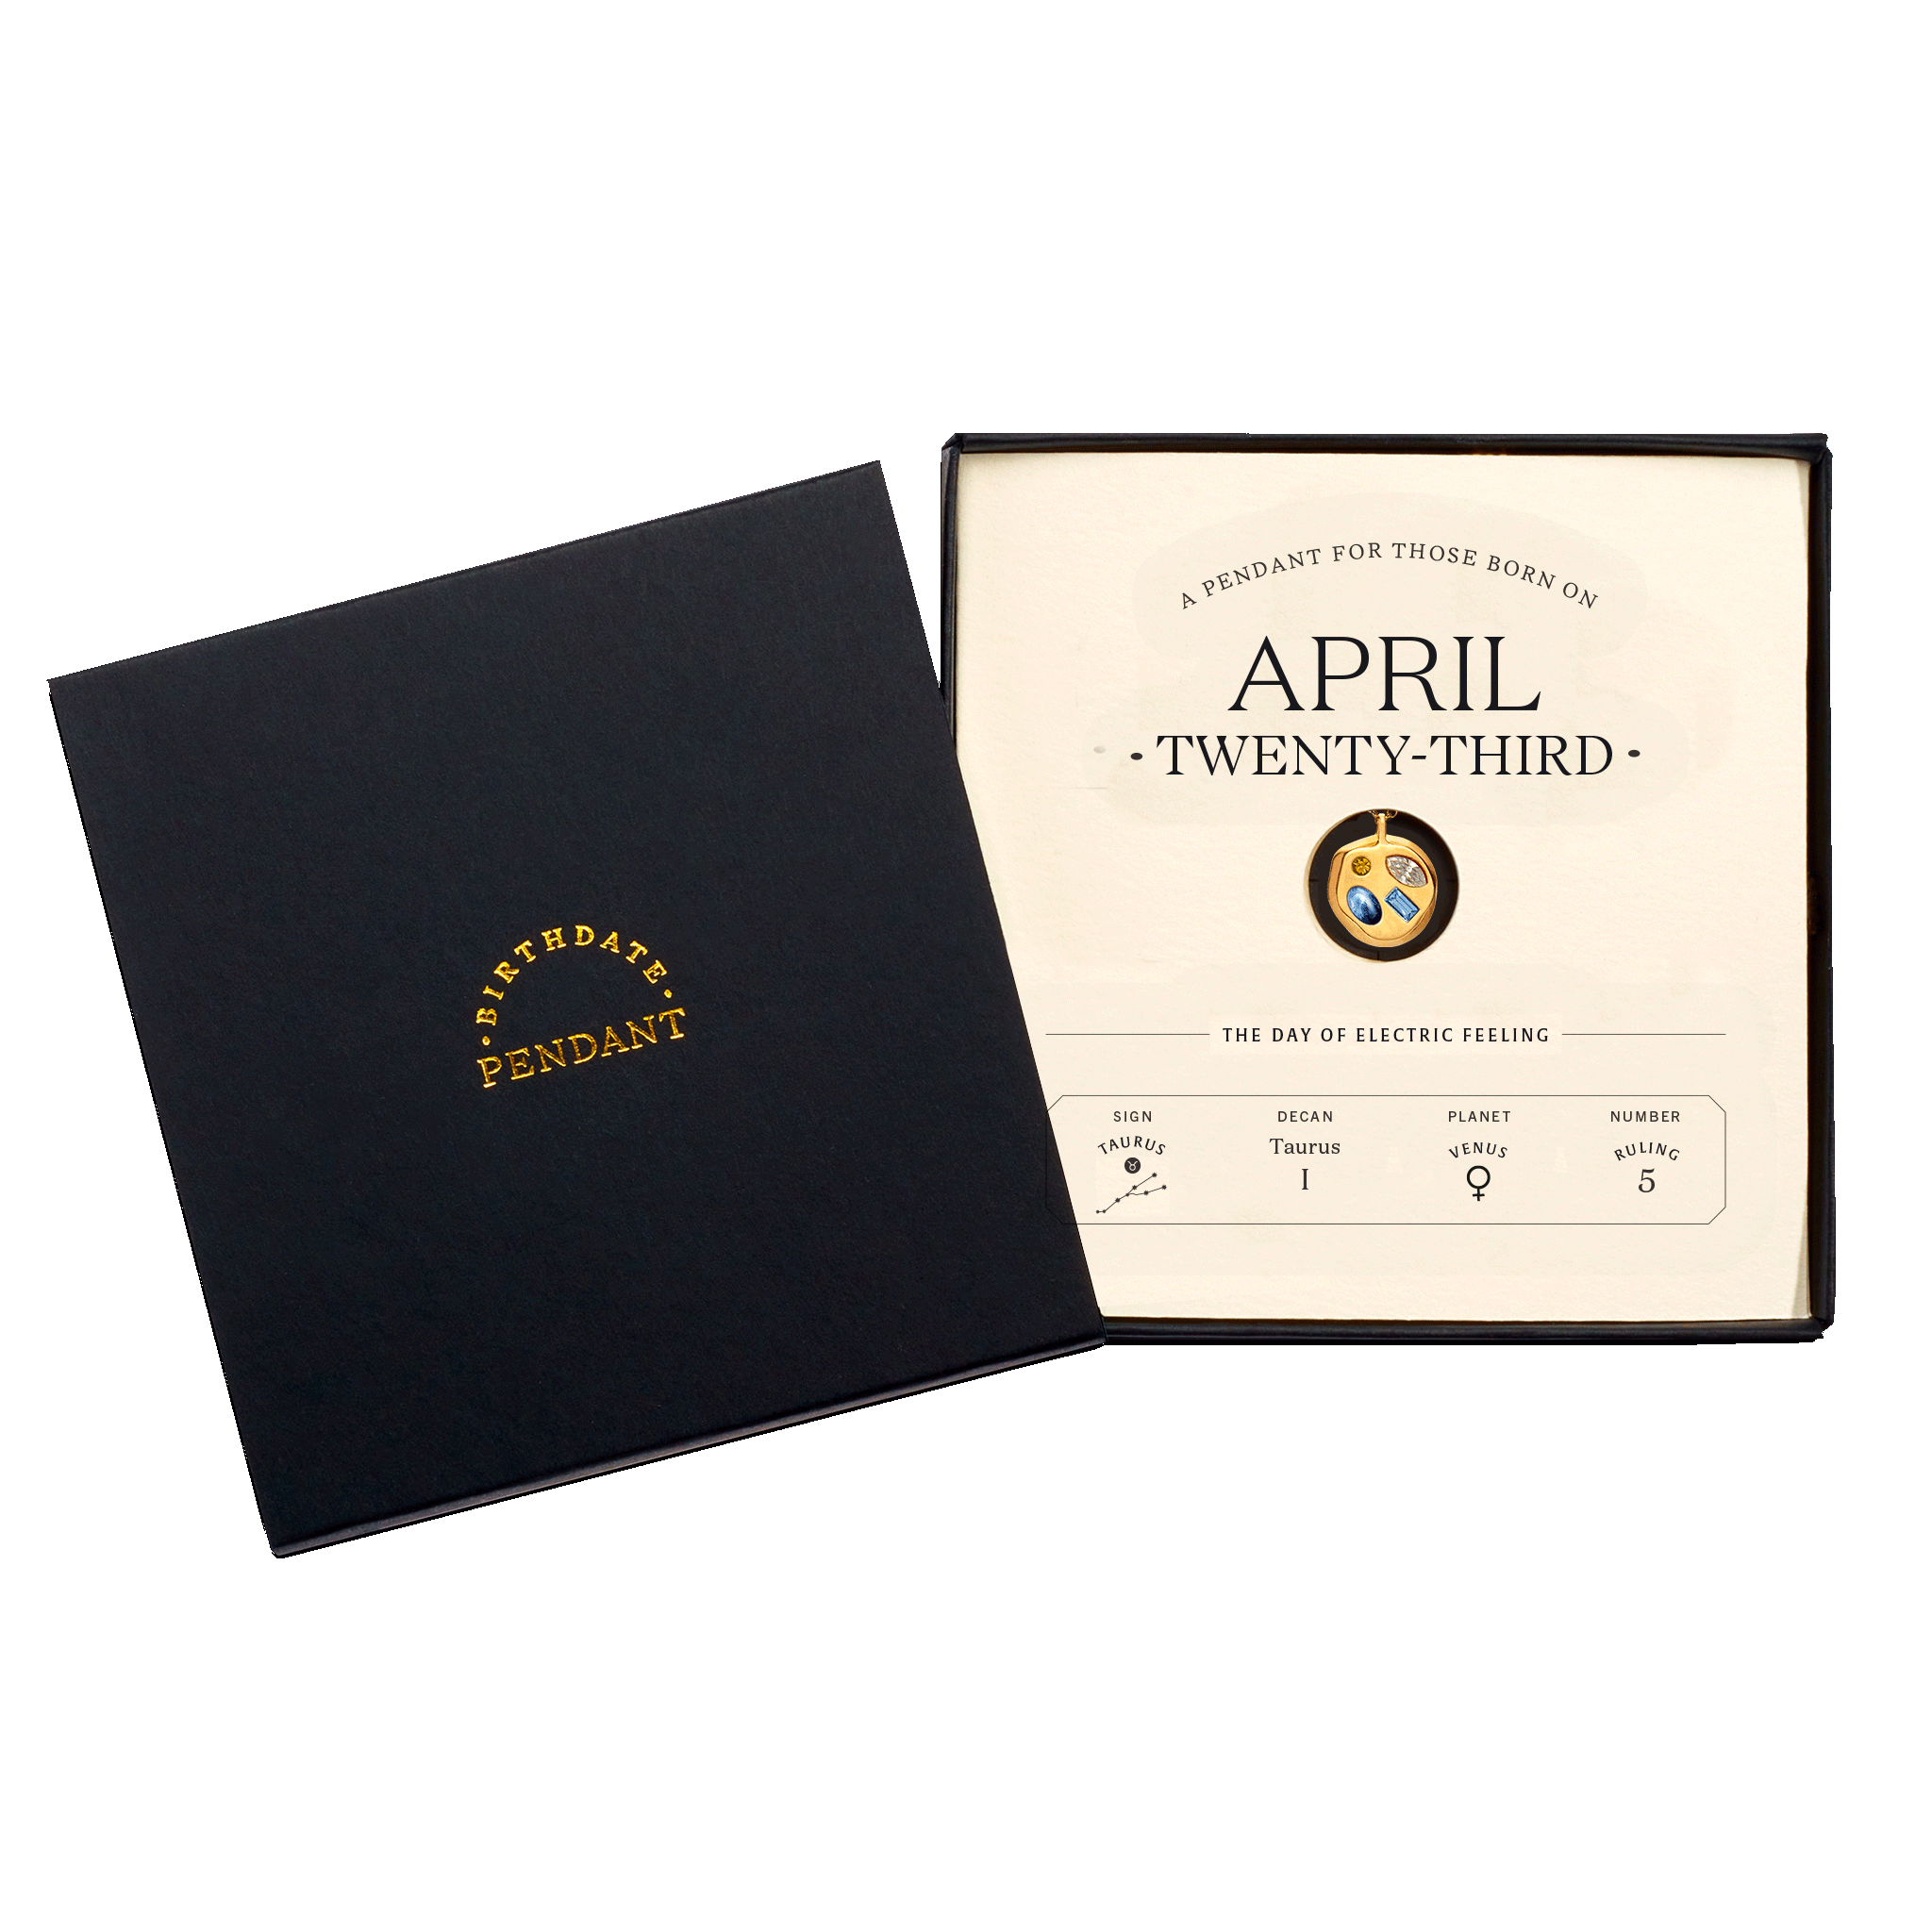 The April Twenty-Third Pendant inside its box